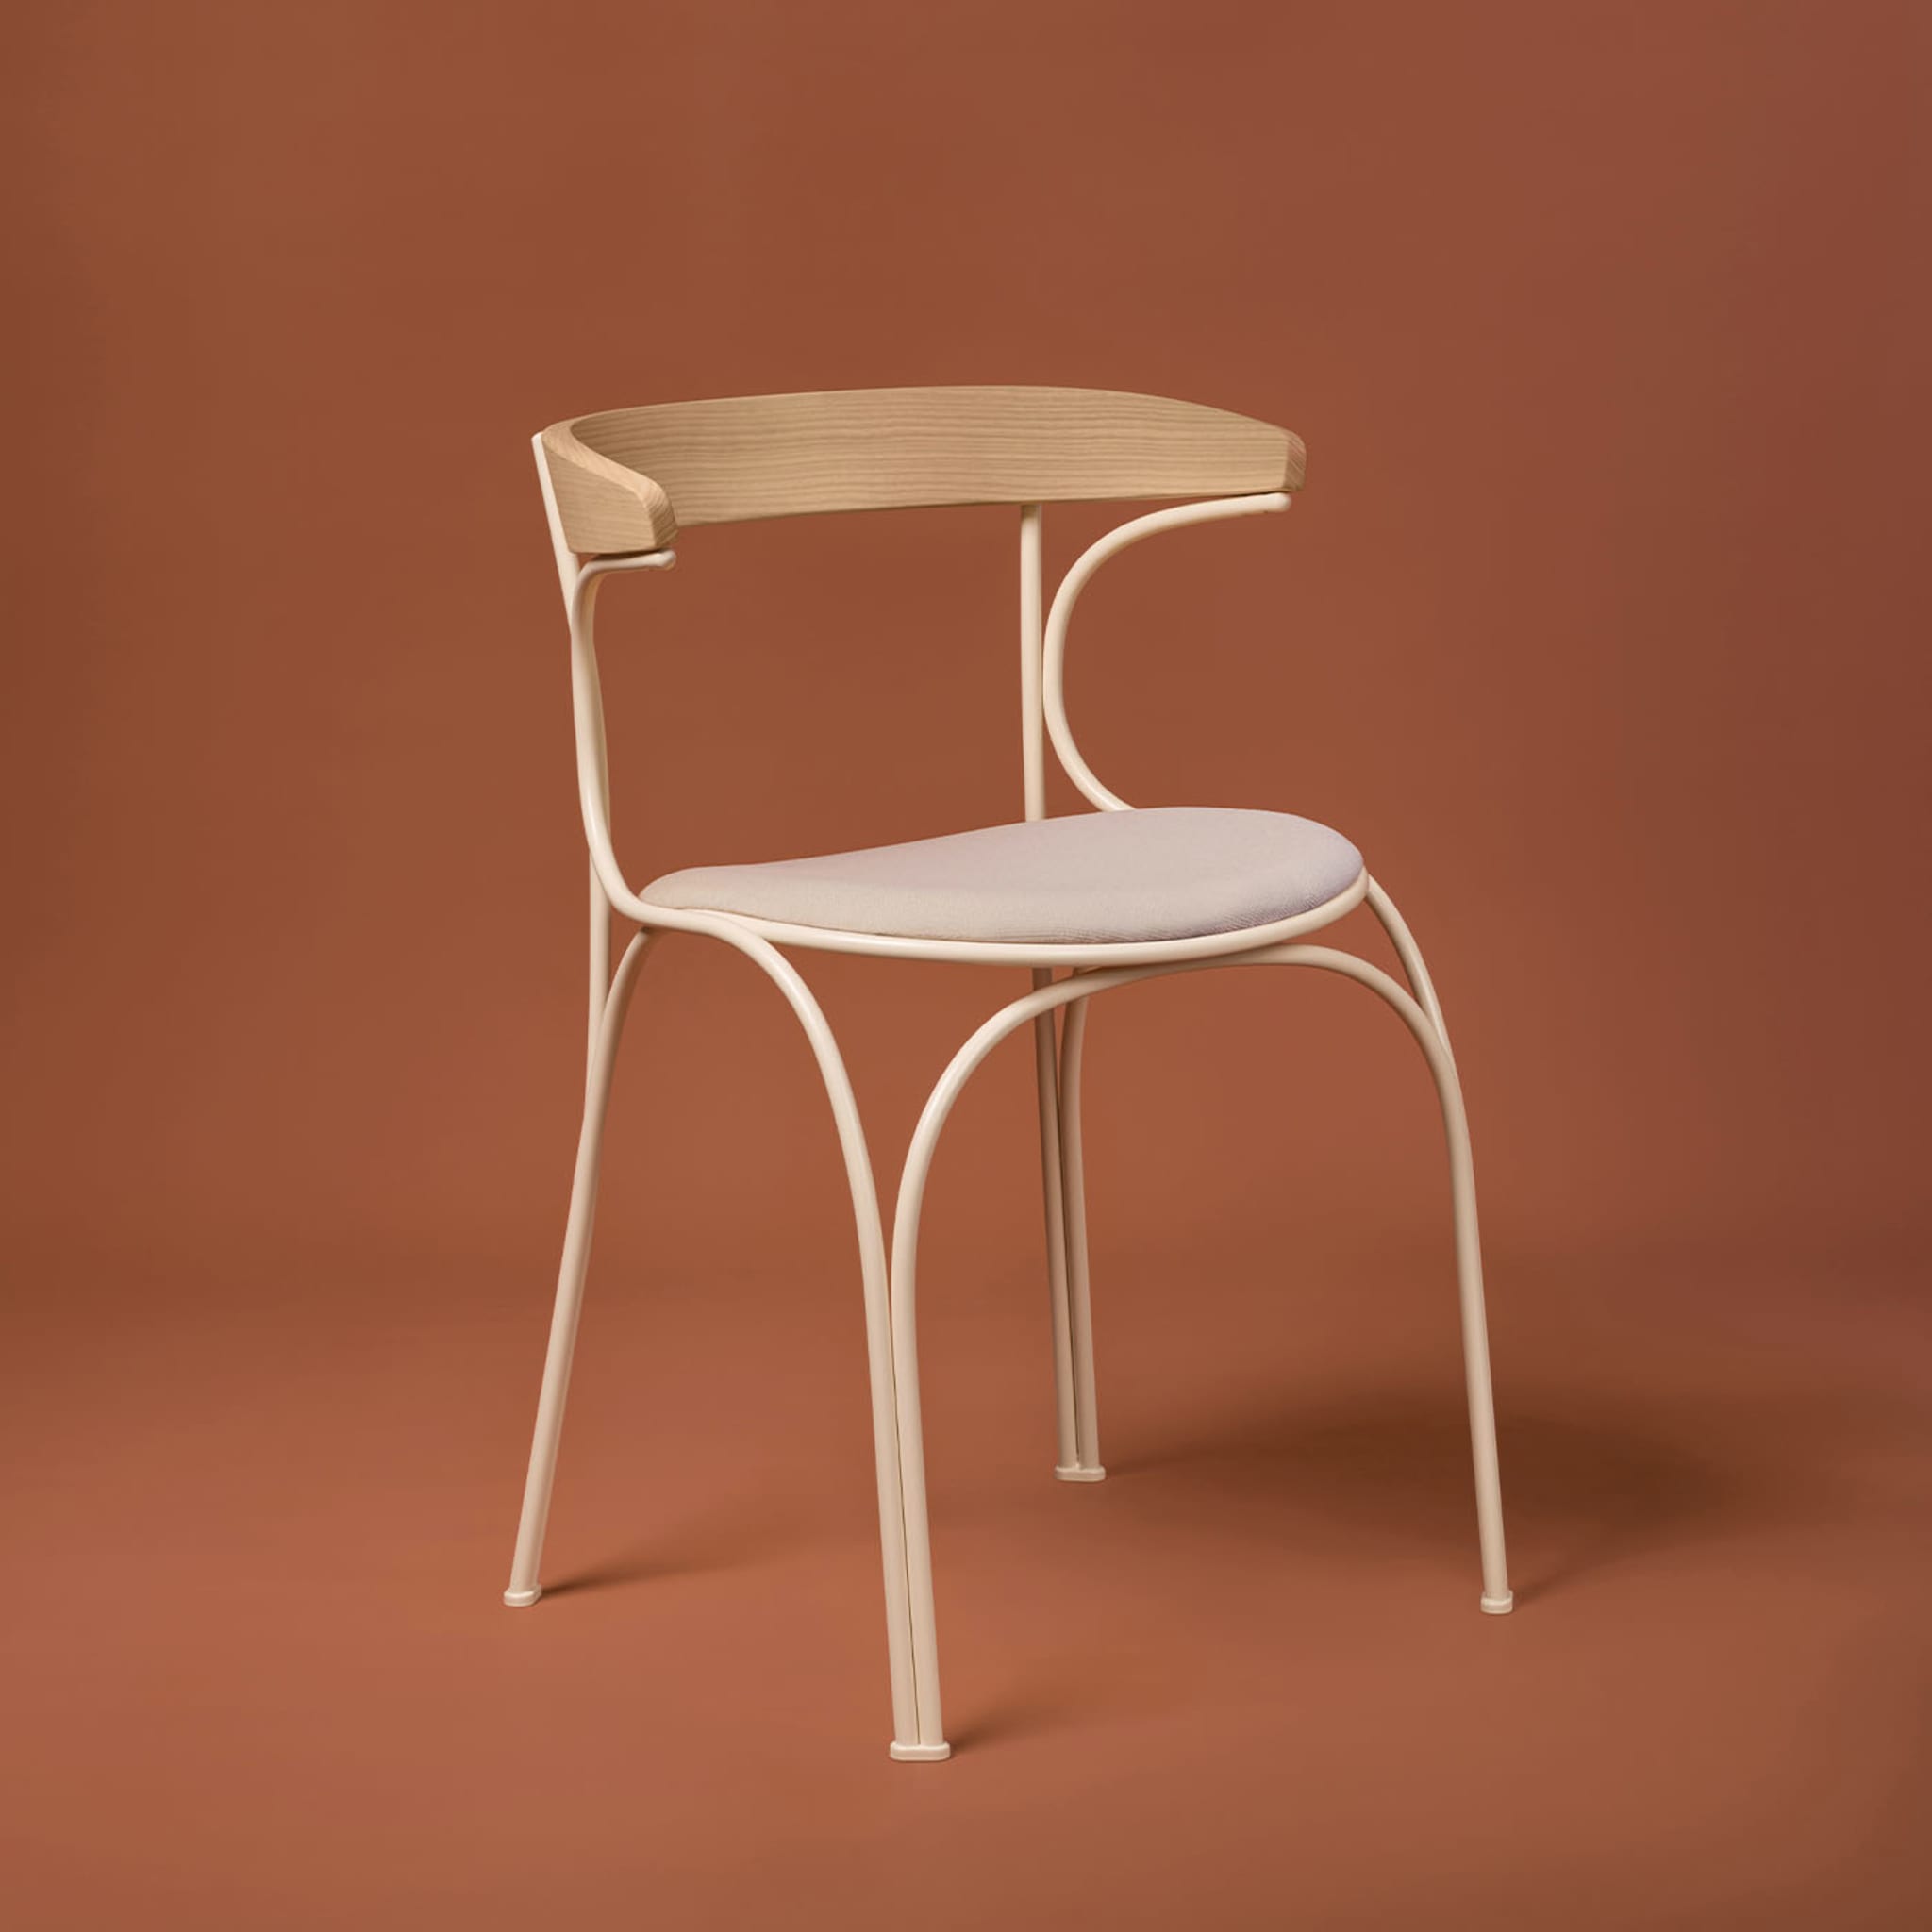 Ample White Chair by Nichetto Studio - Alternative view 1